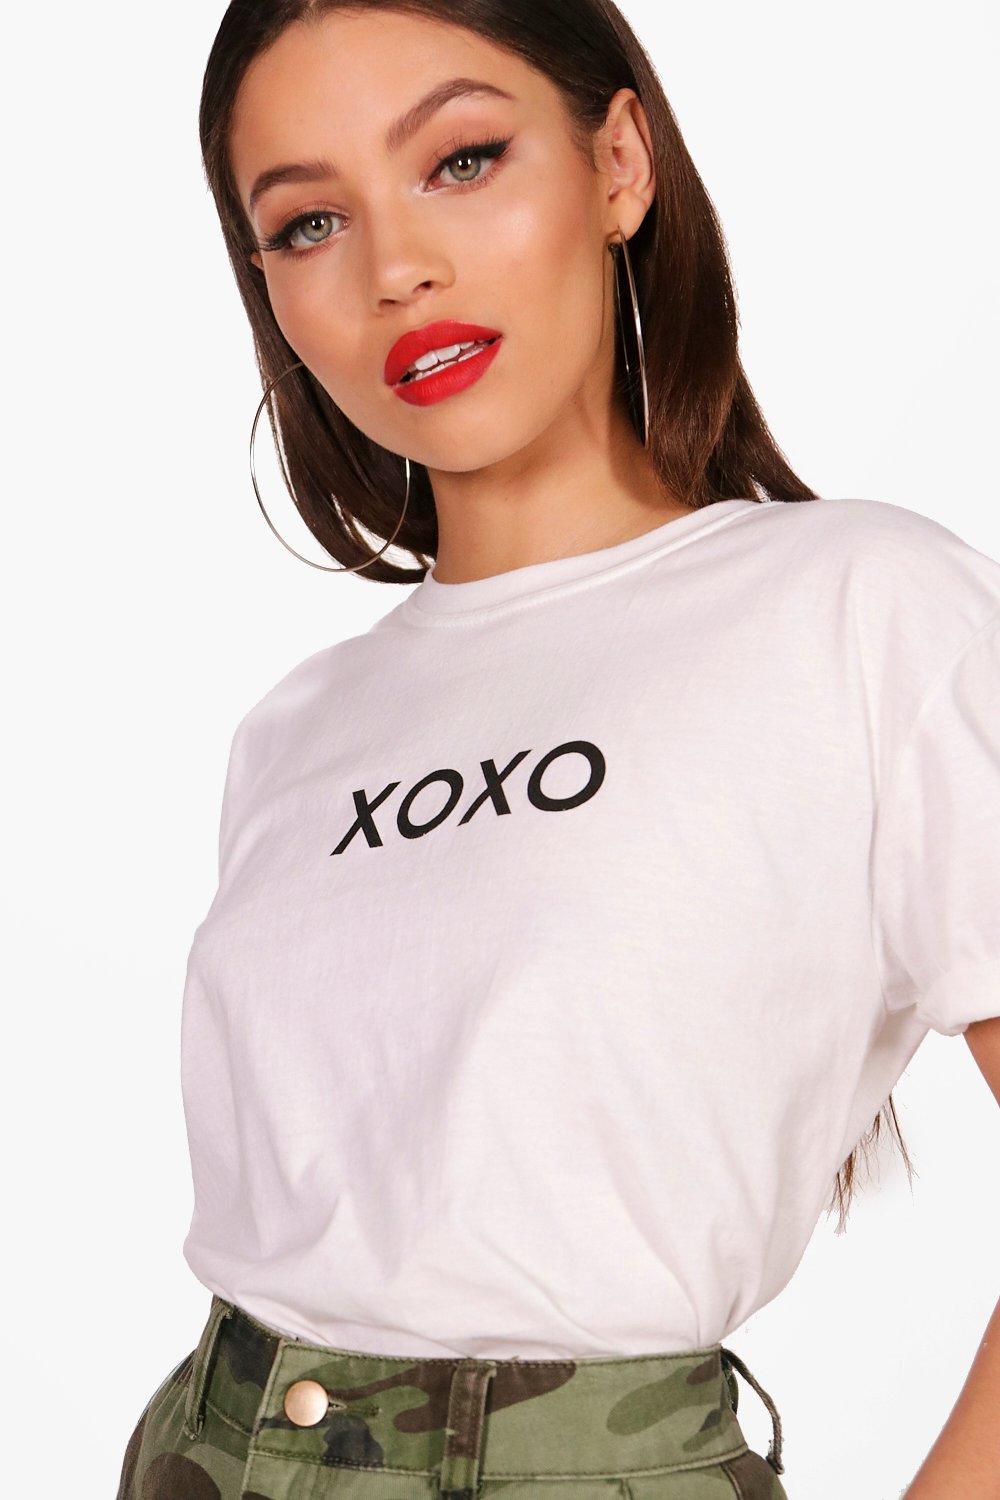 Boohoo Womens Sarah Xoxo Slogan T Shirt